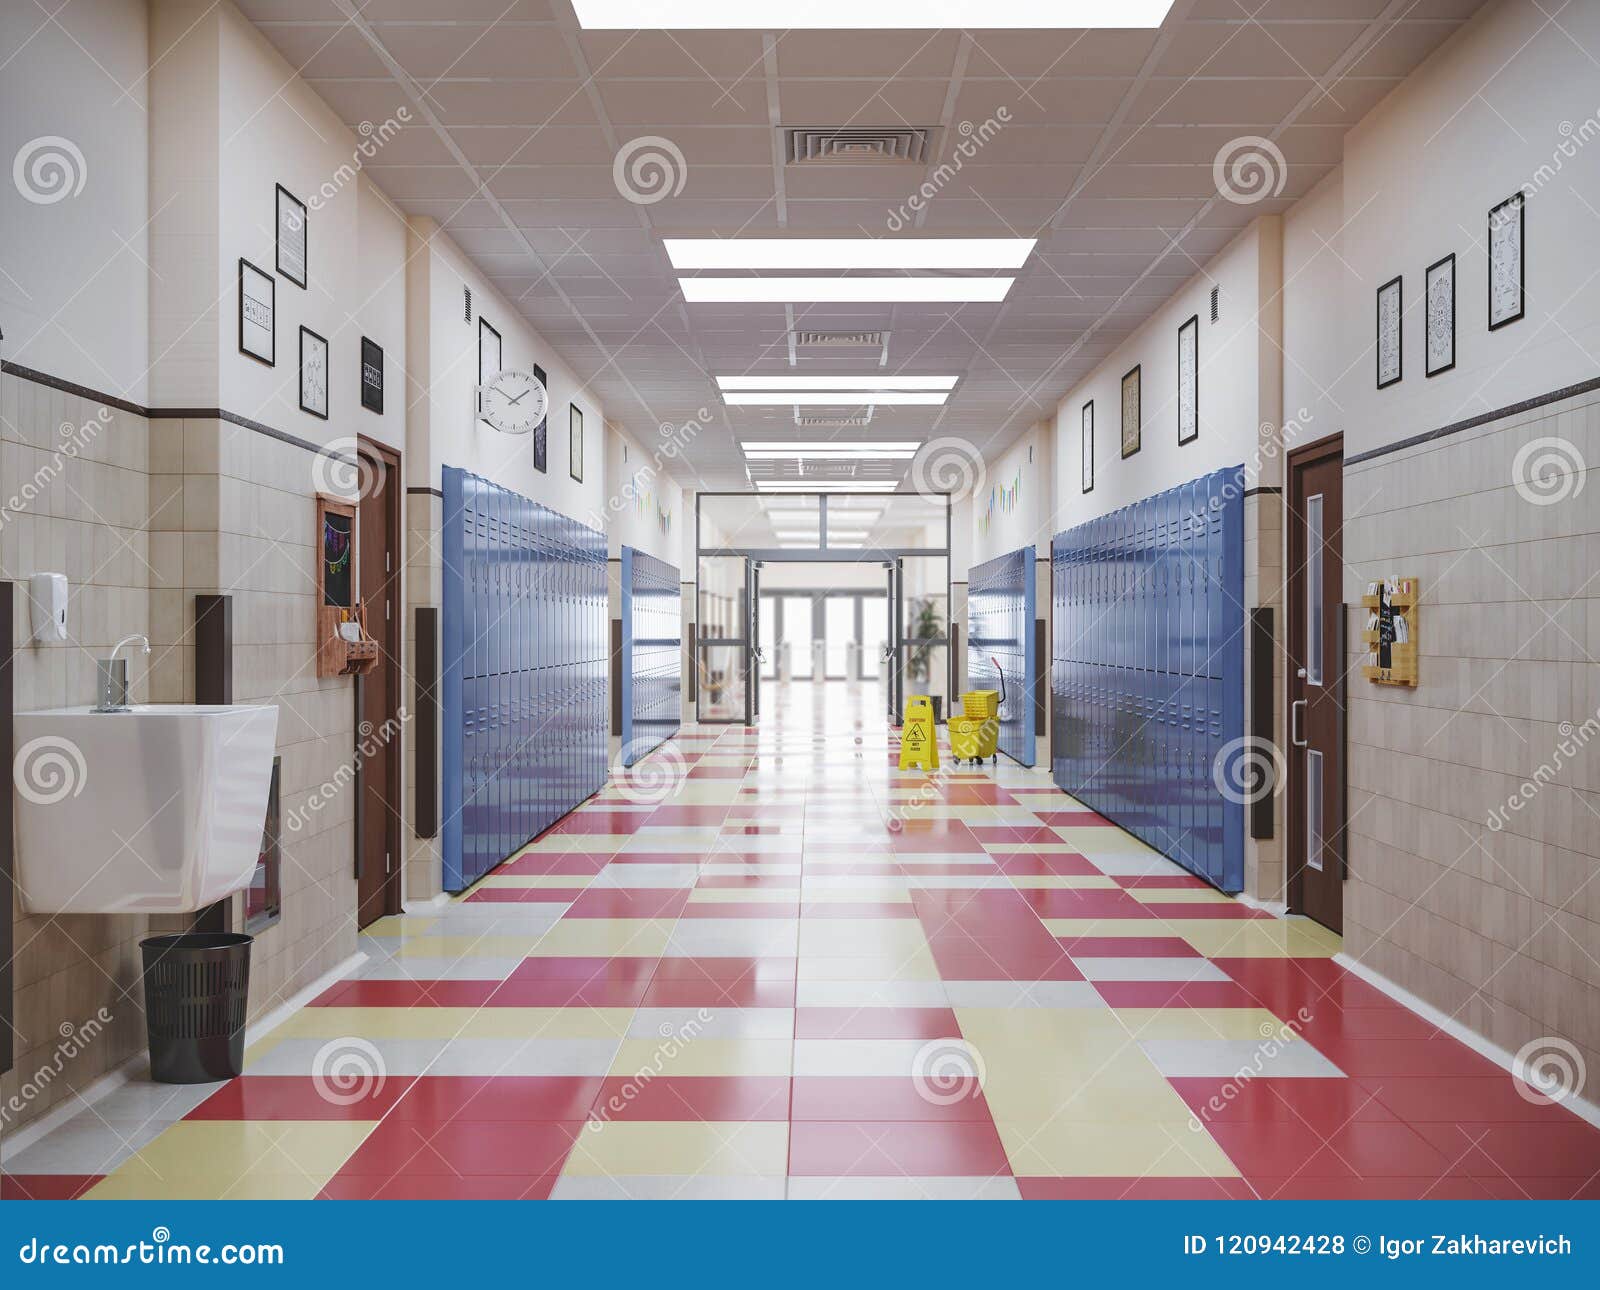 school hallway interior